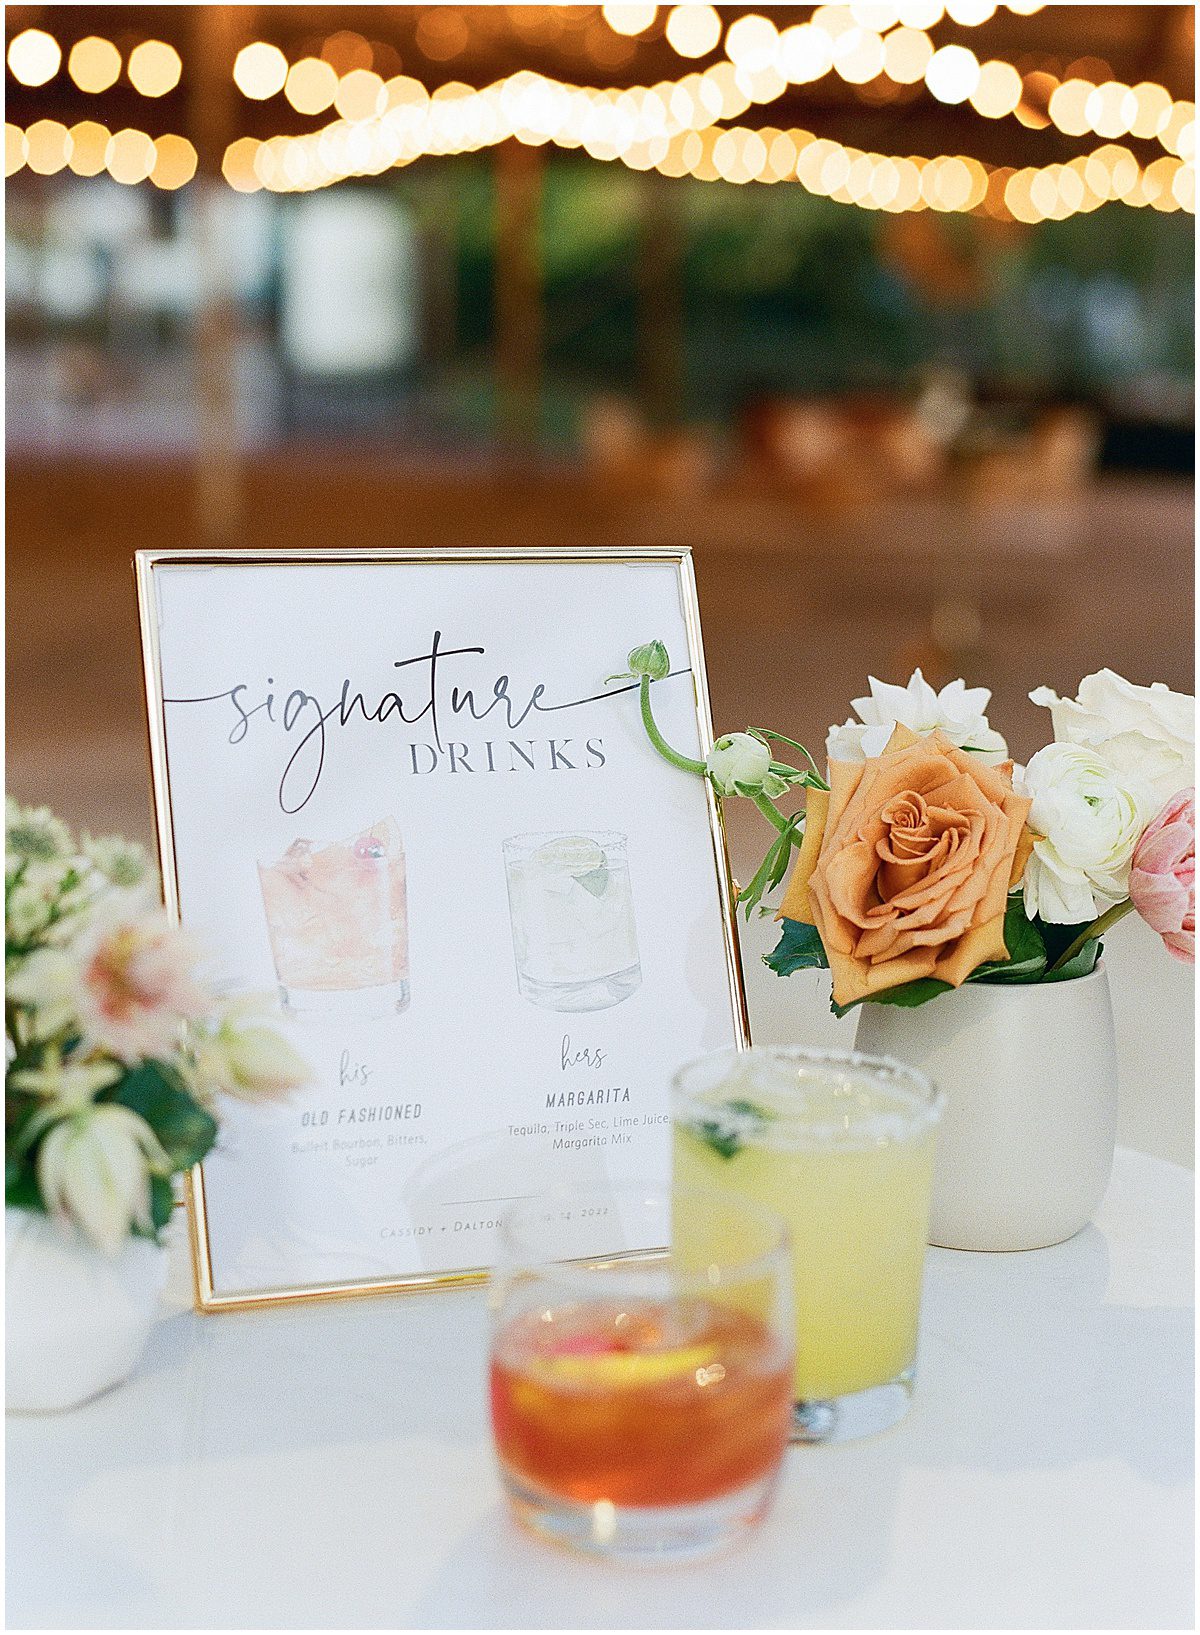 Signature Drinks Sign at Wedding Reception Photo